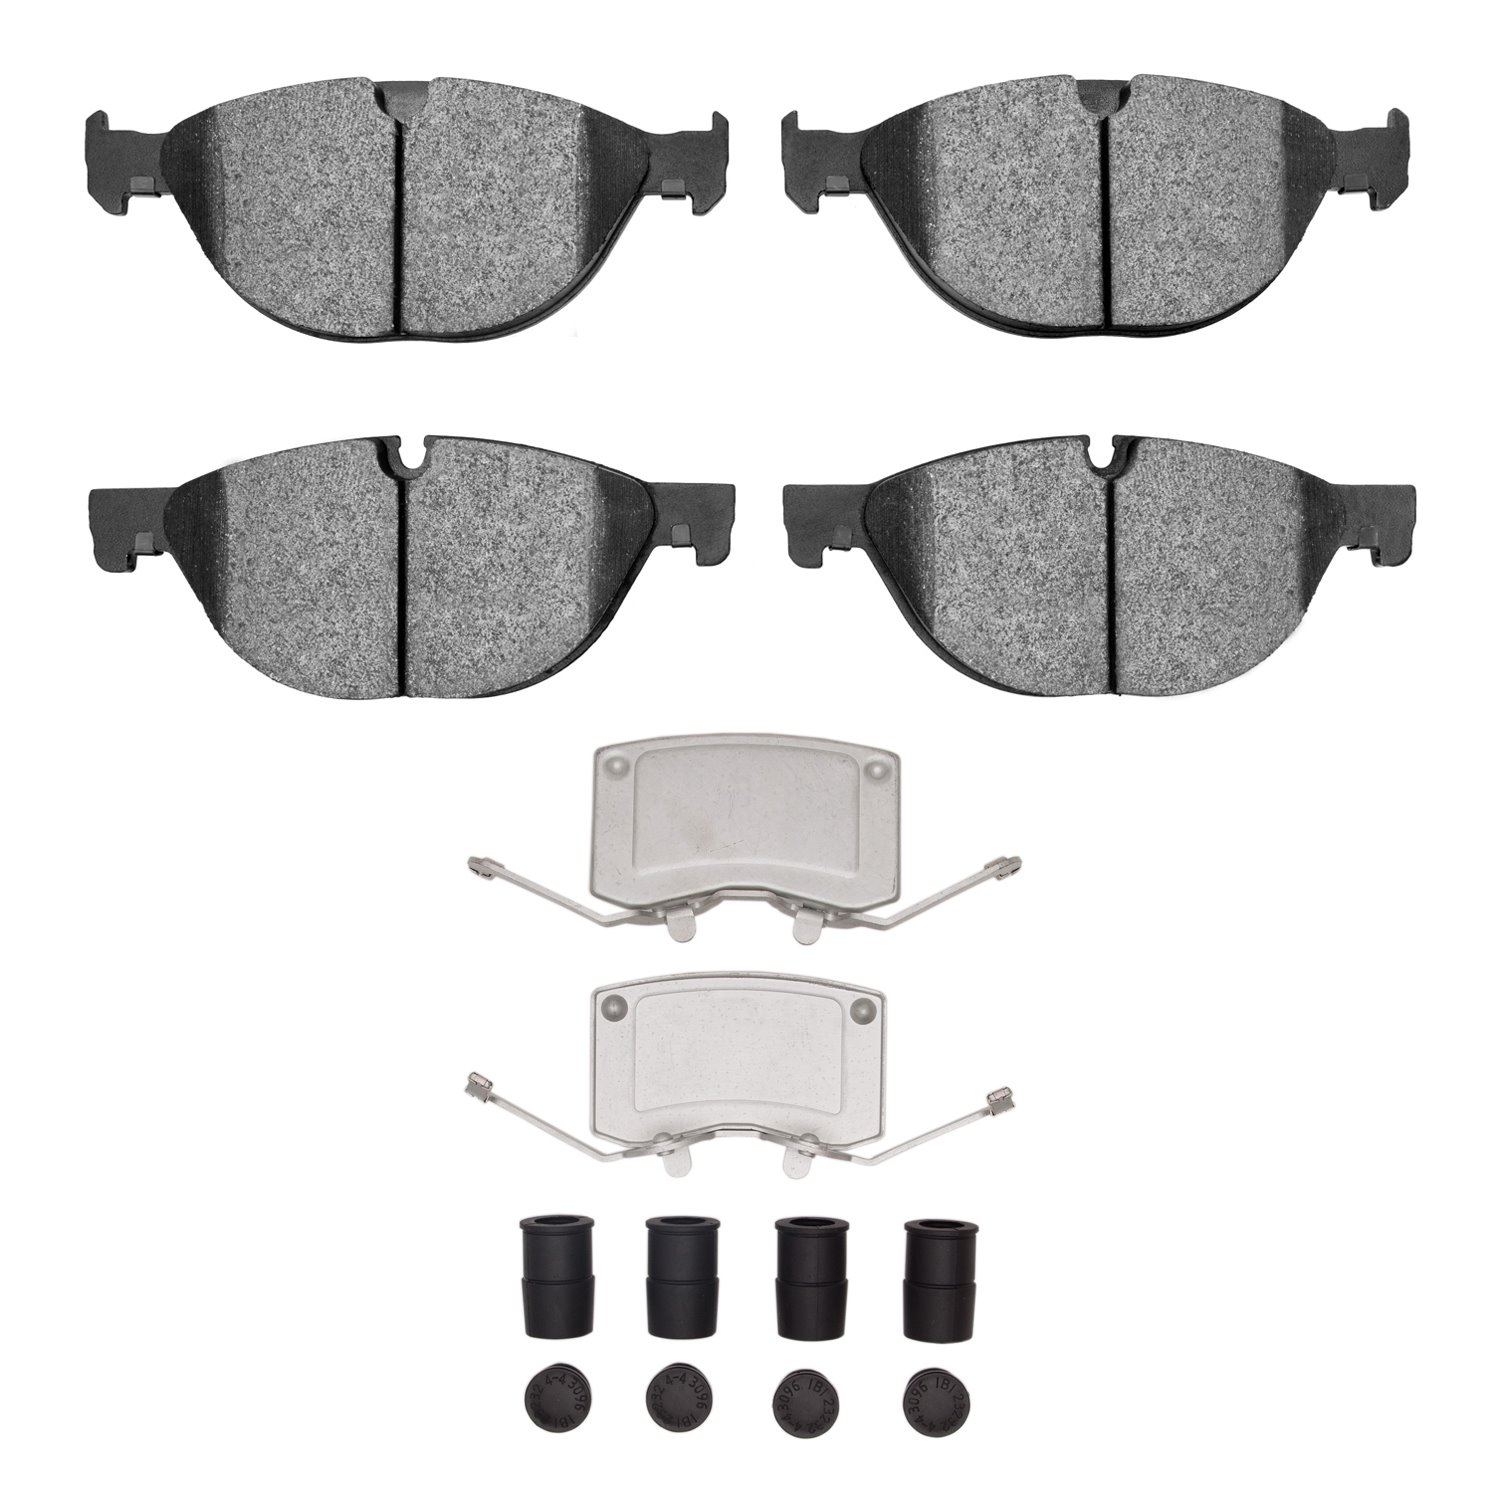 1311-1448-01 3000-Series Semi-Metallic Brake Pads & Hardware Kit, Fits Select Jaguar, Position: Front